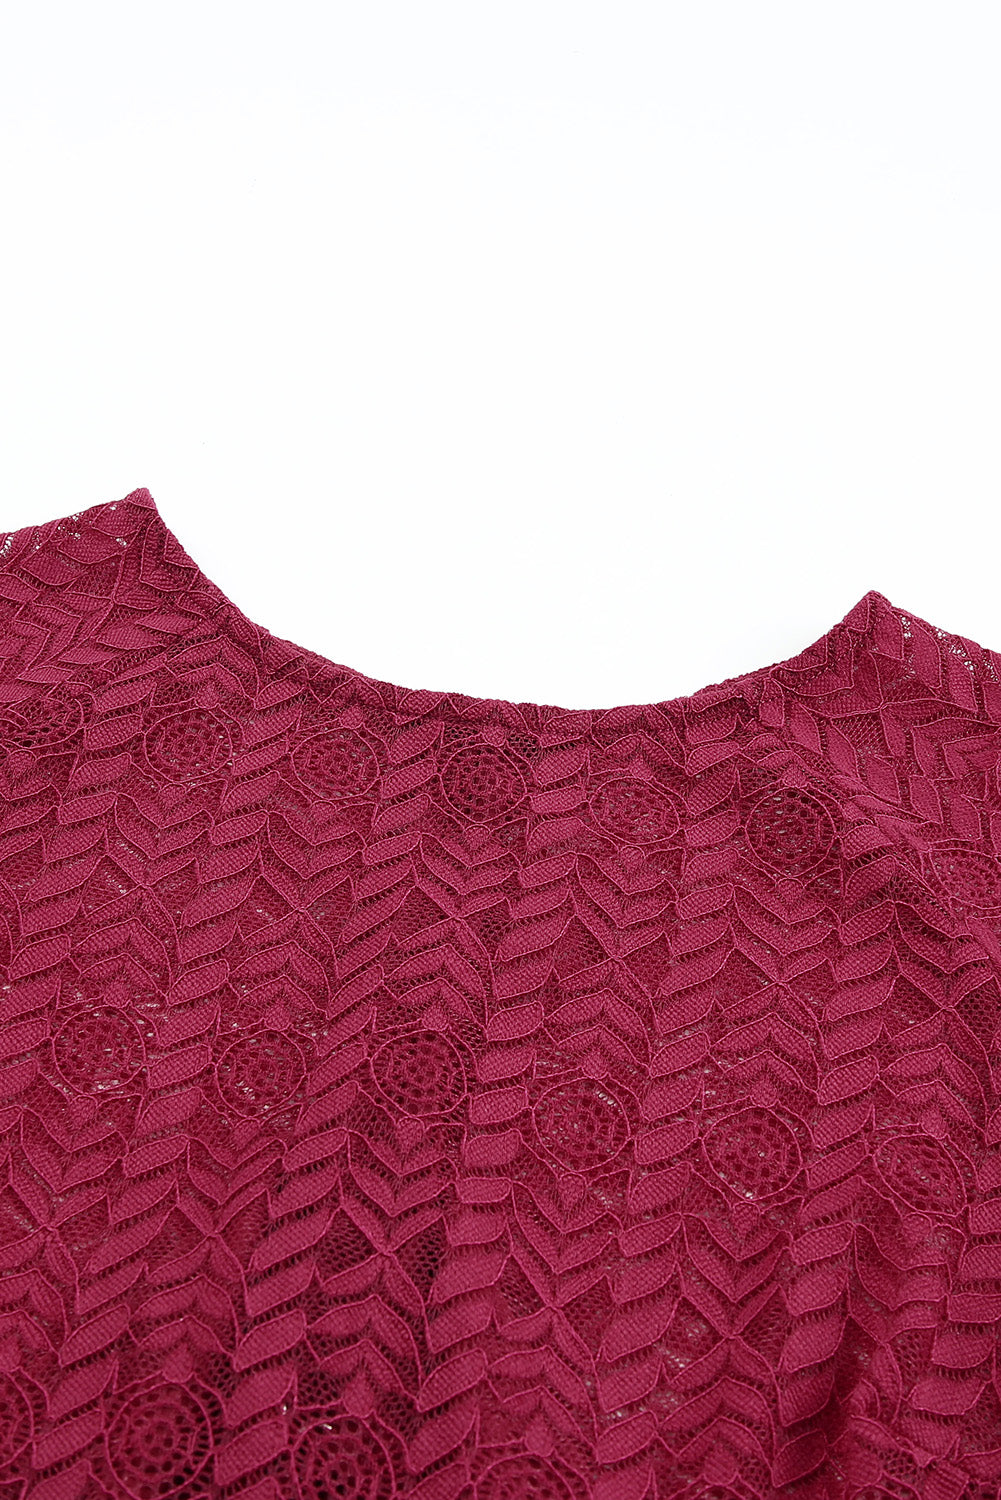 Red Crochet Short Sleeves Lined Midi Dress